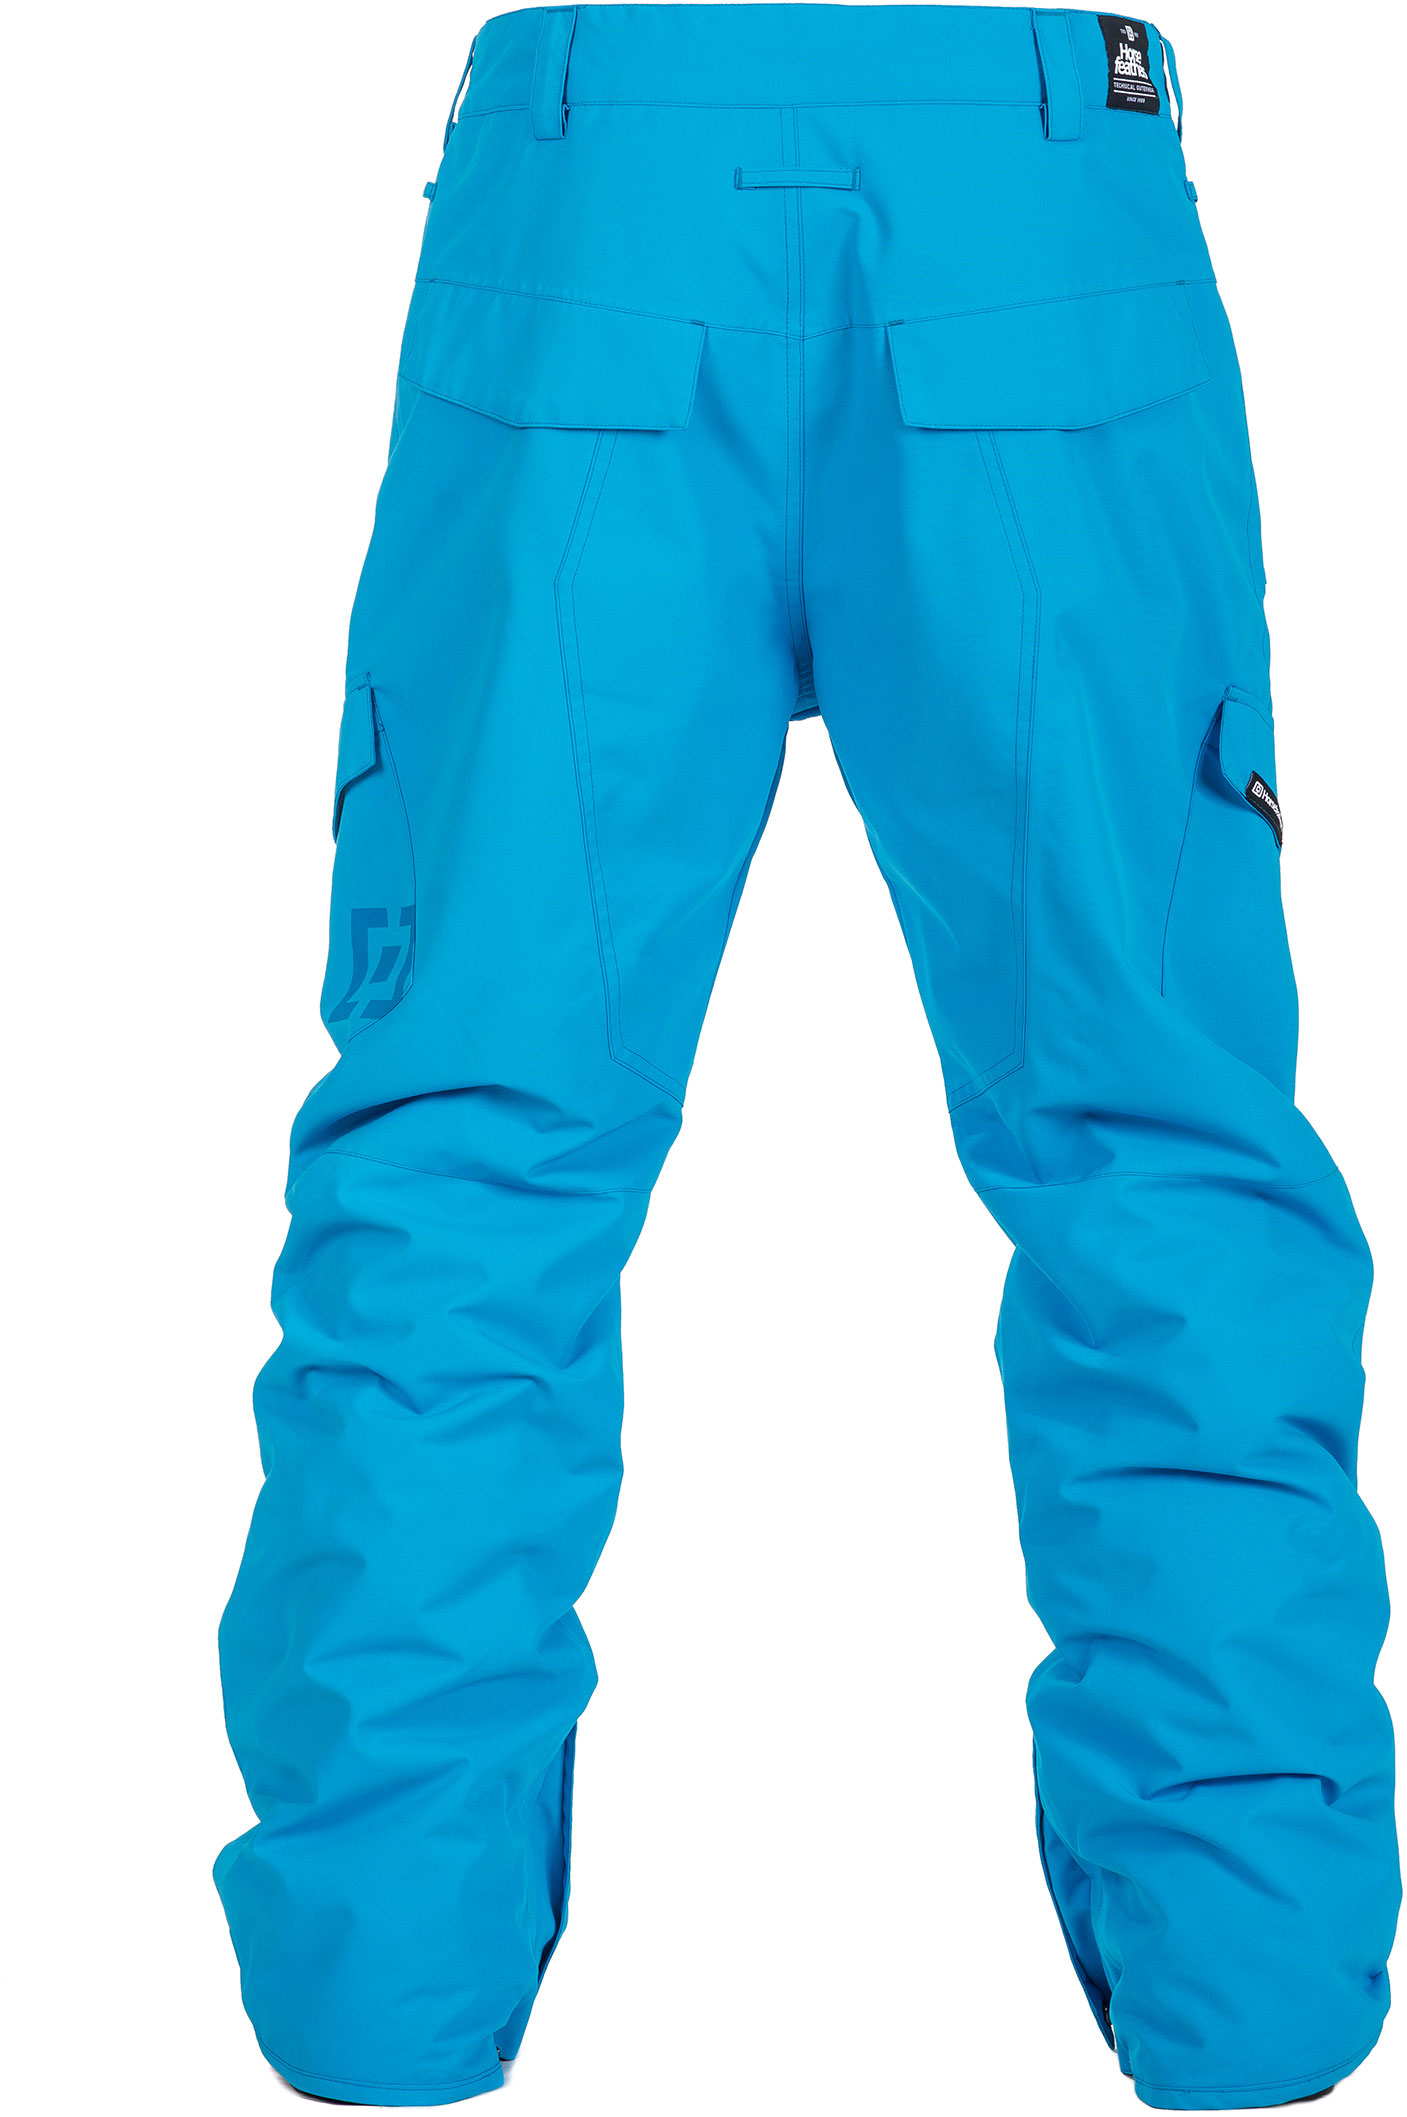 Men’s ski/snowboard pants